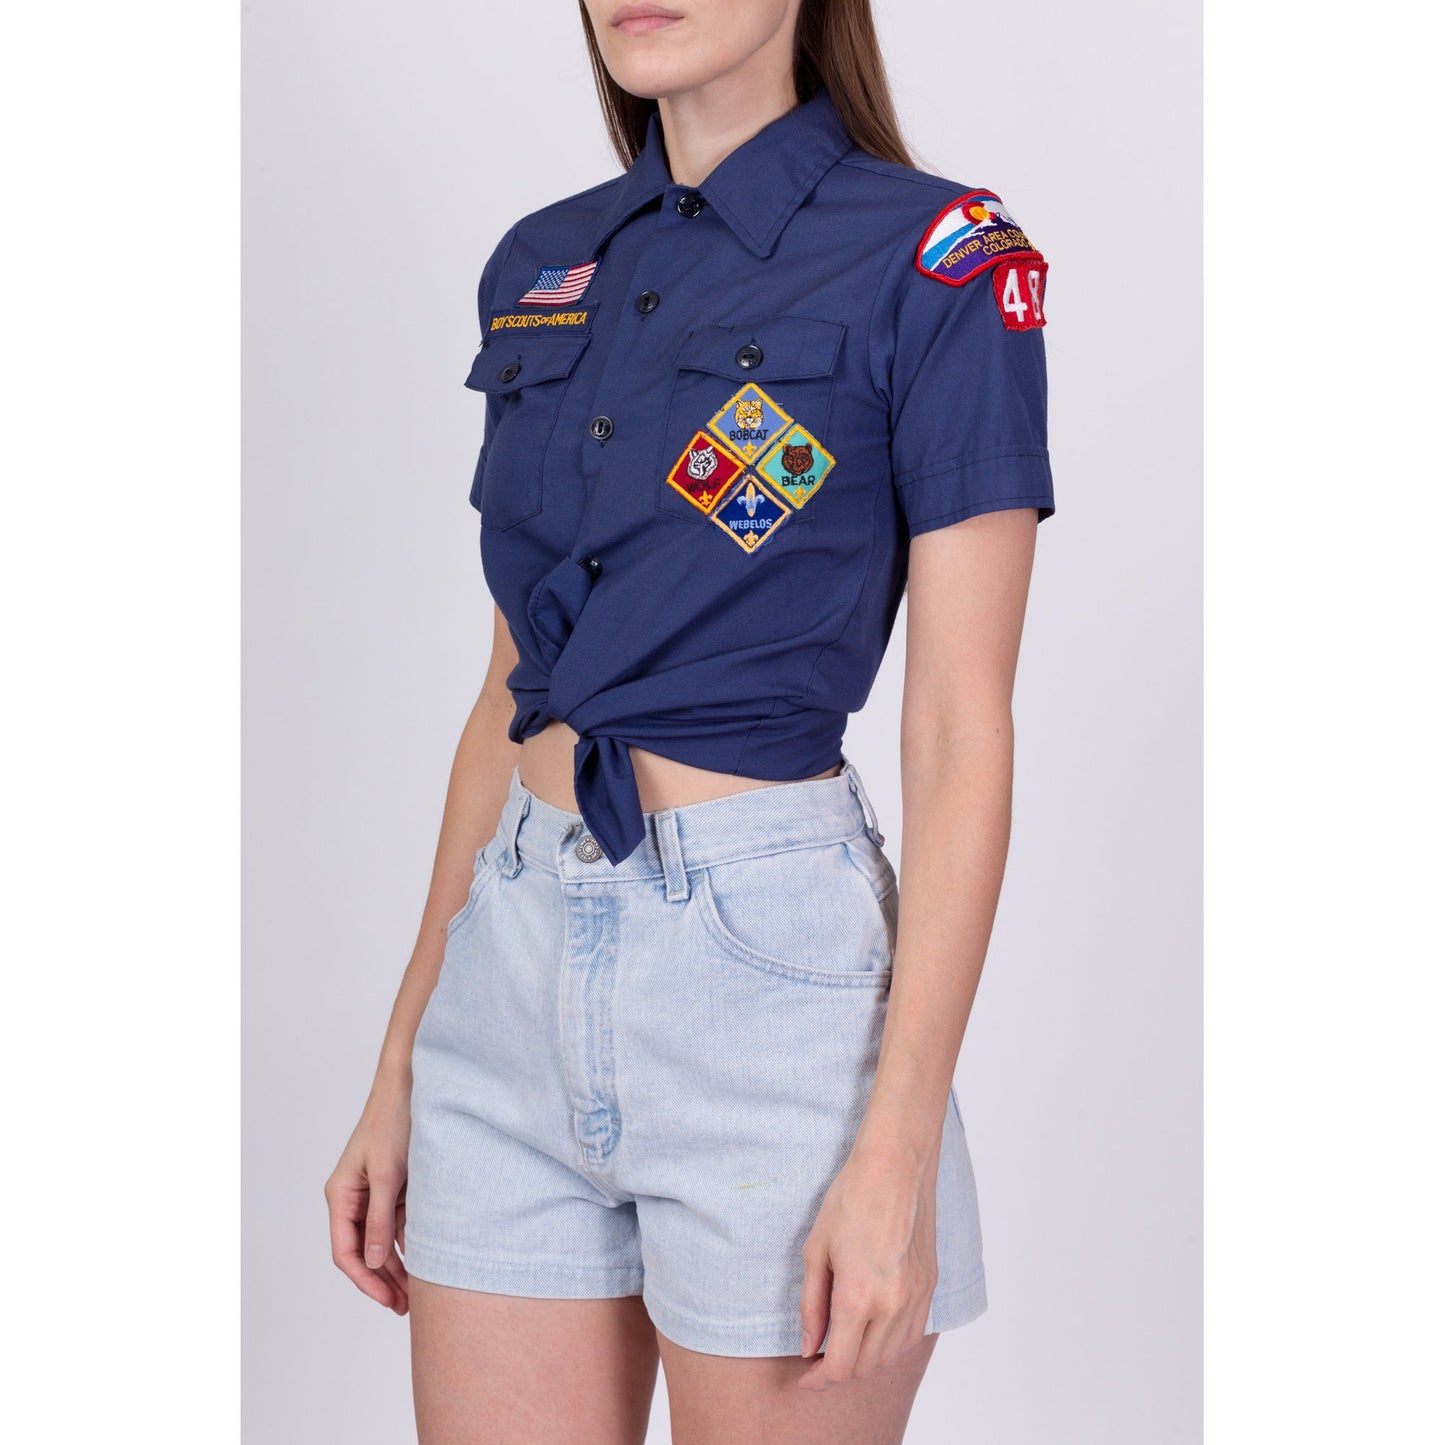 80s Boy Scouts Uniform Shirt - Petite XS 